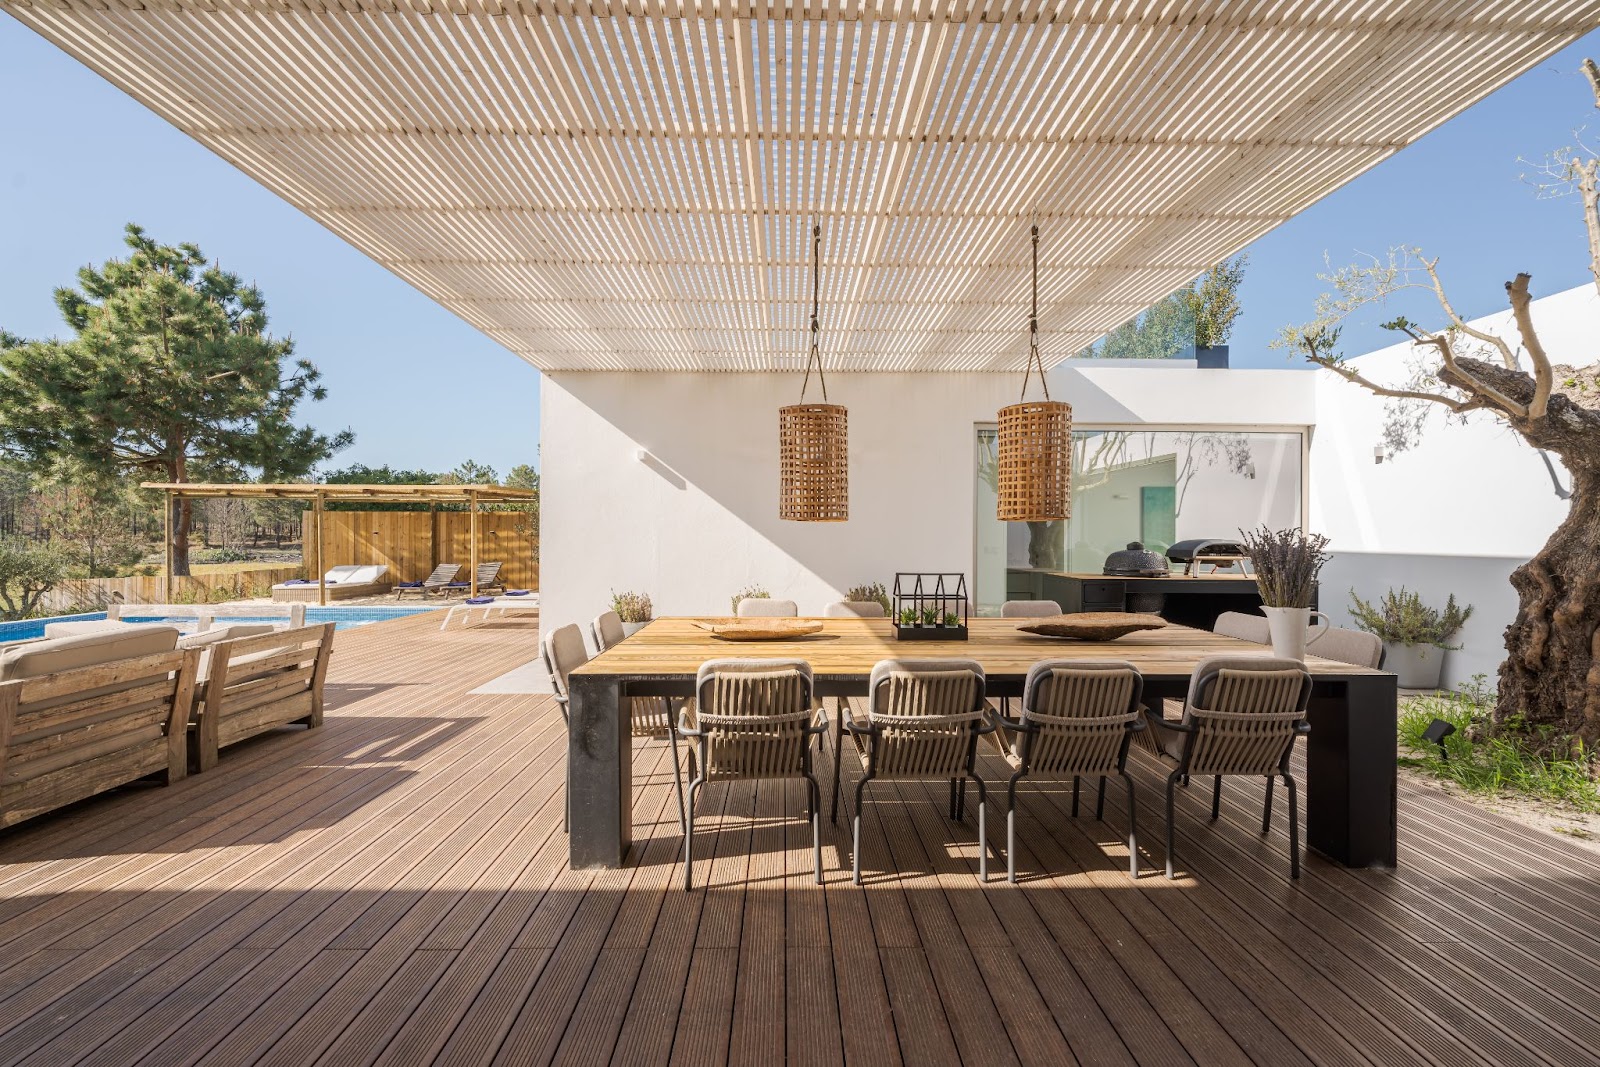 This modern villa has a pool, spacious deck, and interior and exterior views.